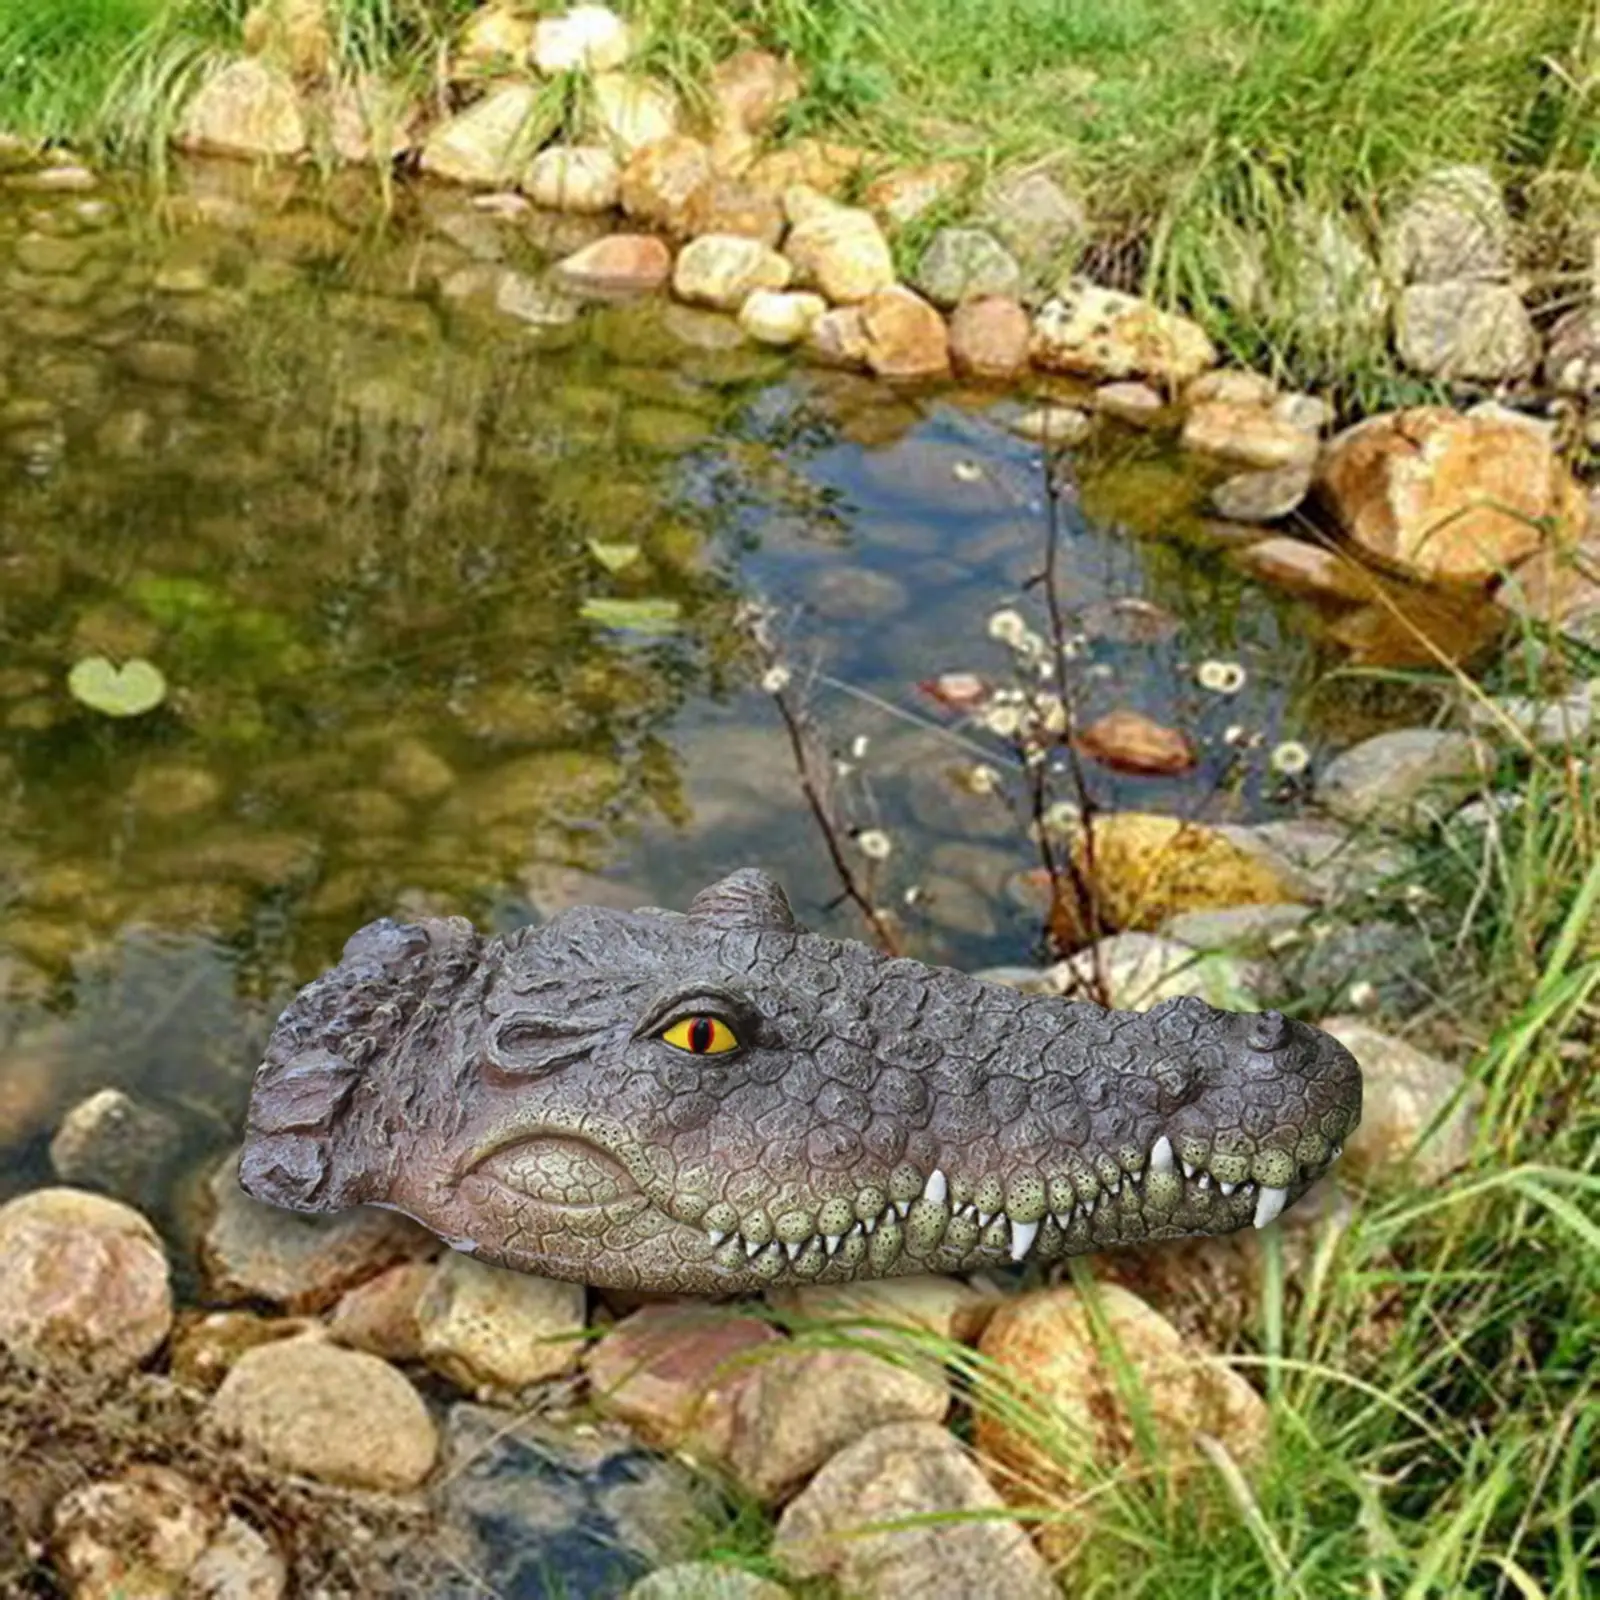 Simulation Floating Crocodile Head Deterrent Ducks Water Decoy Prank Toy Gator Head for Pond Patio Garden Ornament Decoration